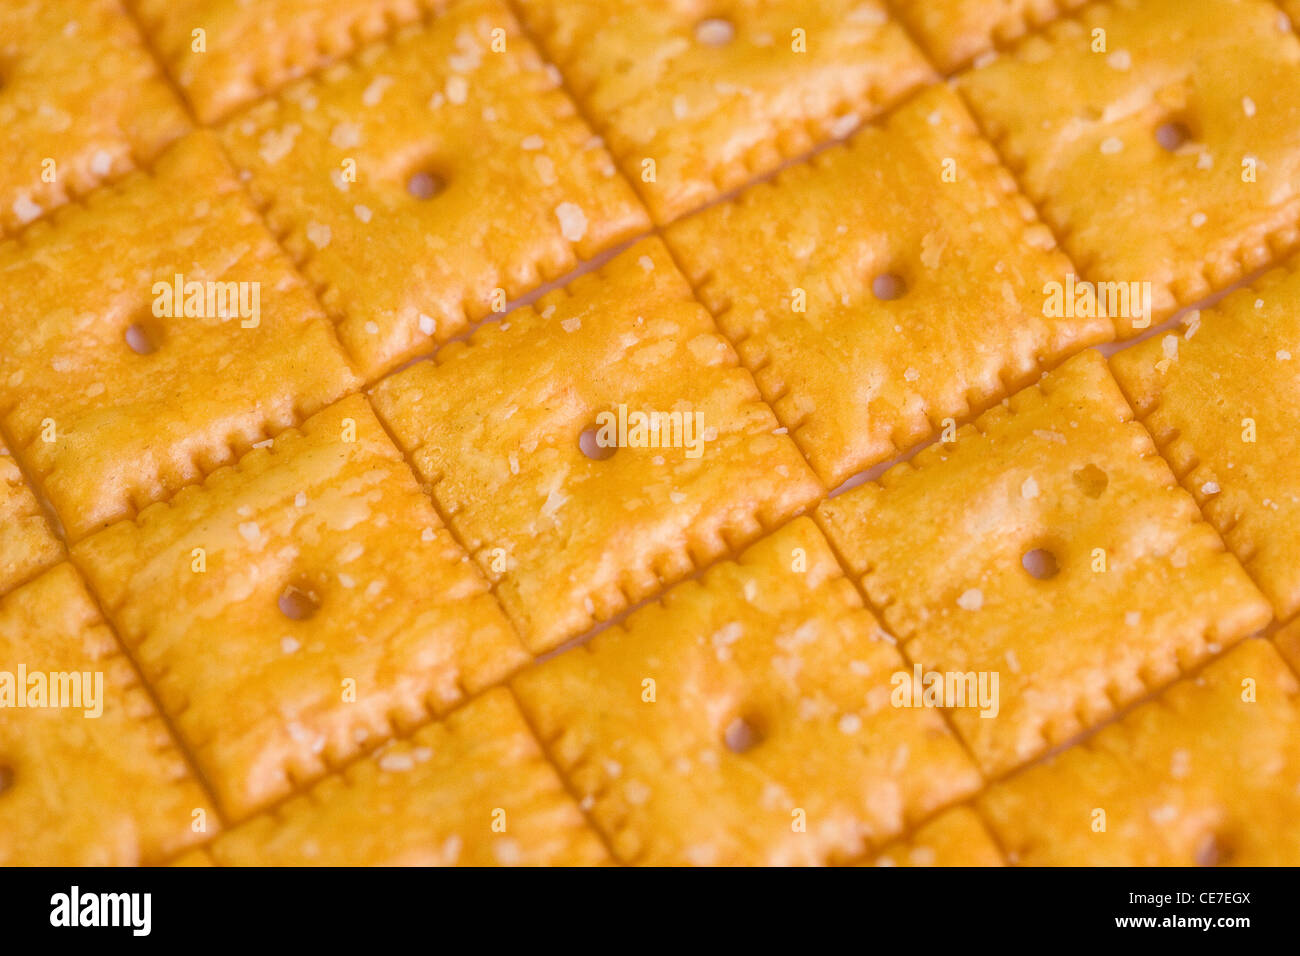 Cheez-it cheese crackers. Stock Photo